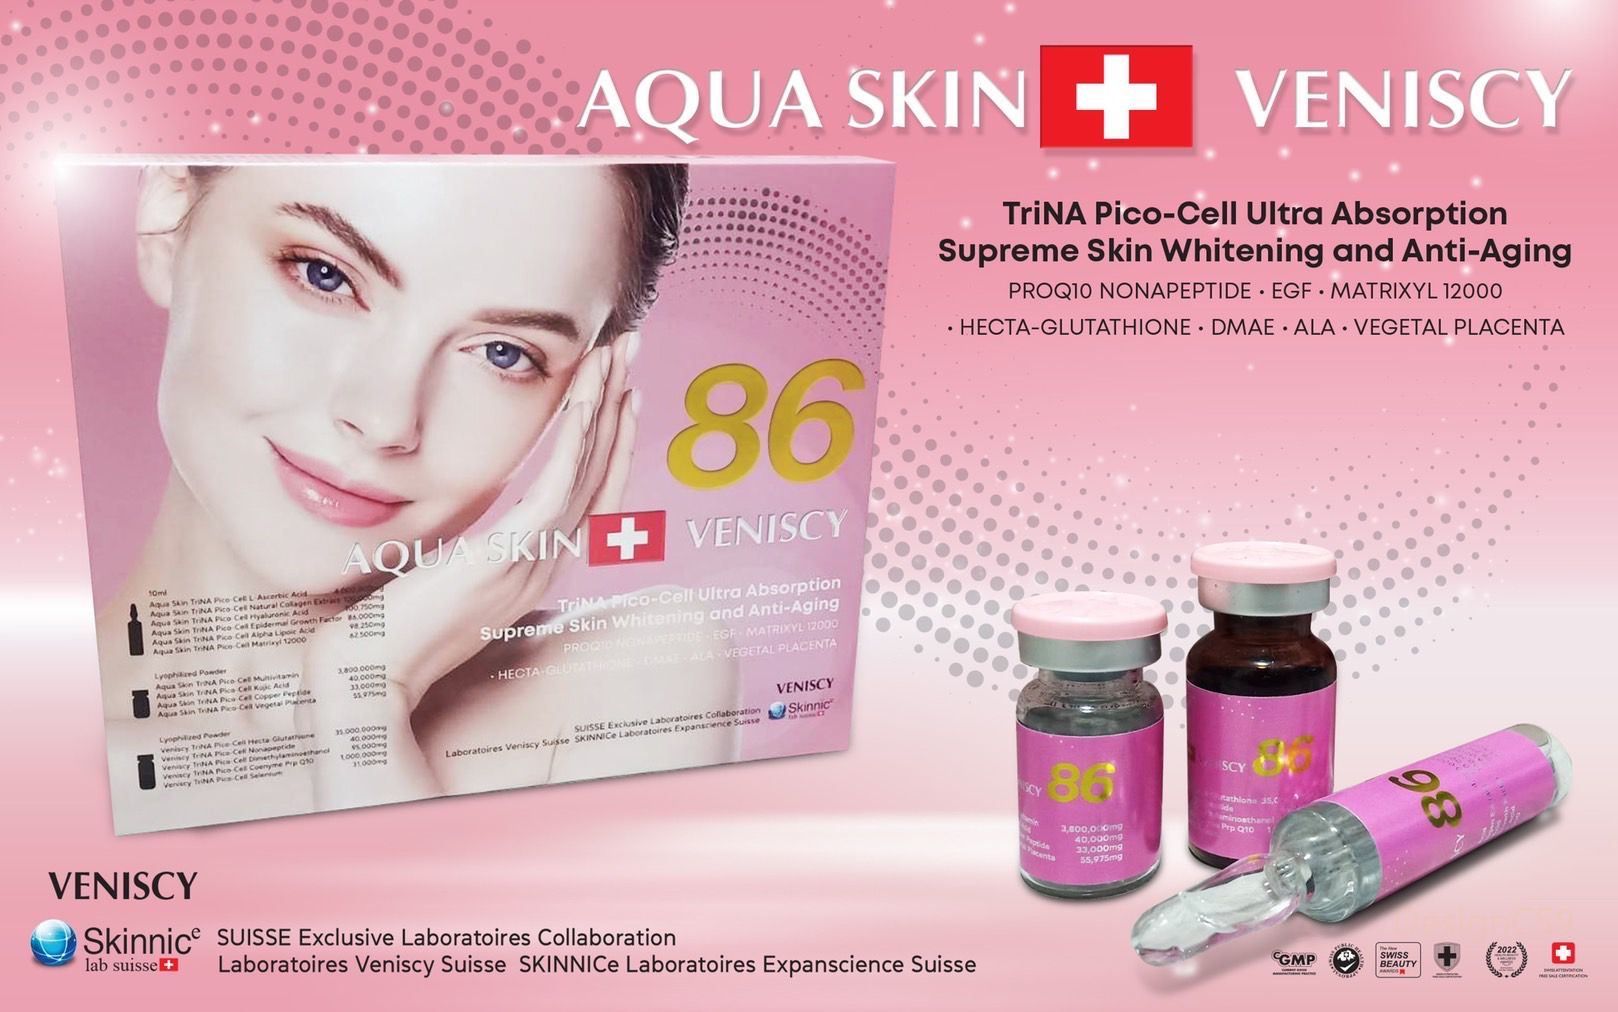 Aqua Skin Veniscy 86 TriNA Pico-Cell Ultra Absorption Glutathione Skin Whitening Injection reviews